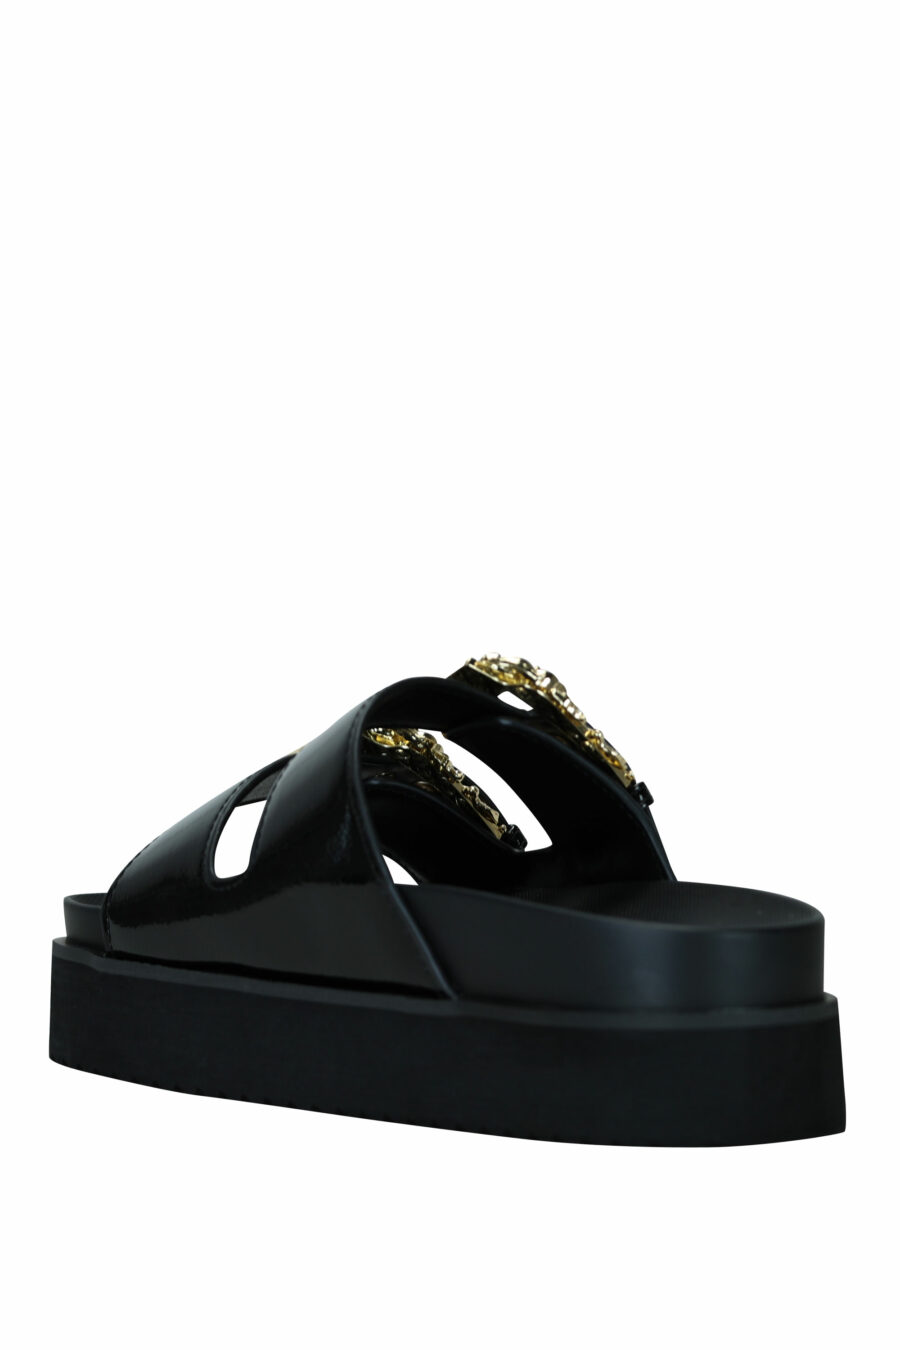 Sandalias negras con doble hebilla barroca dorada - 8052019607253 4